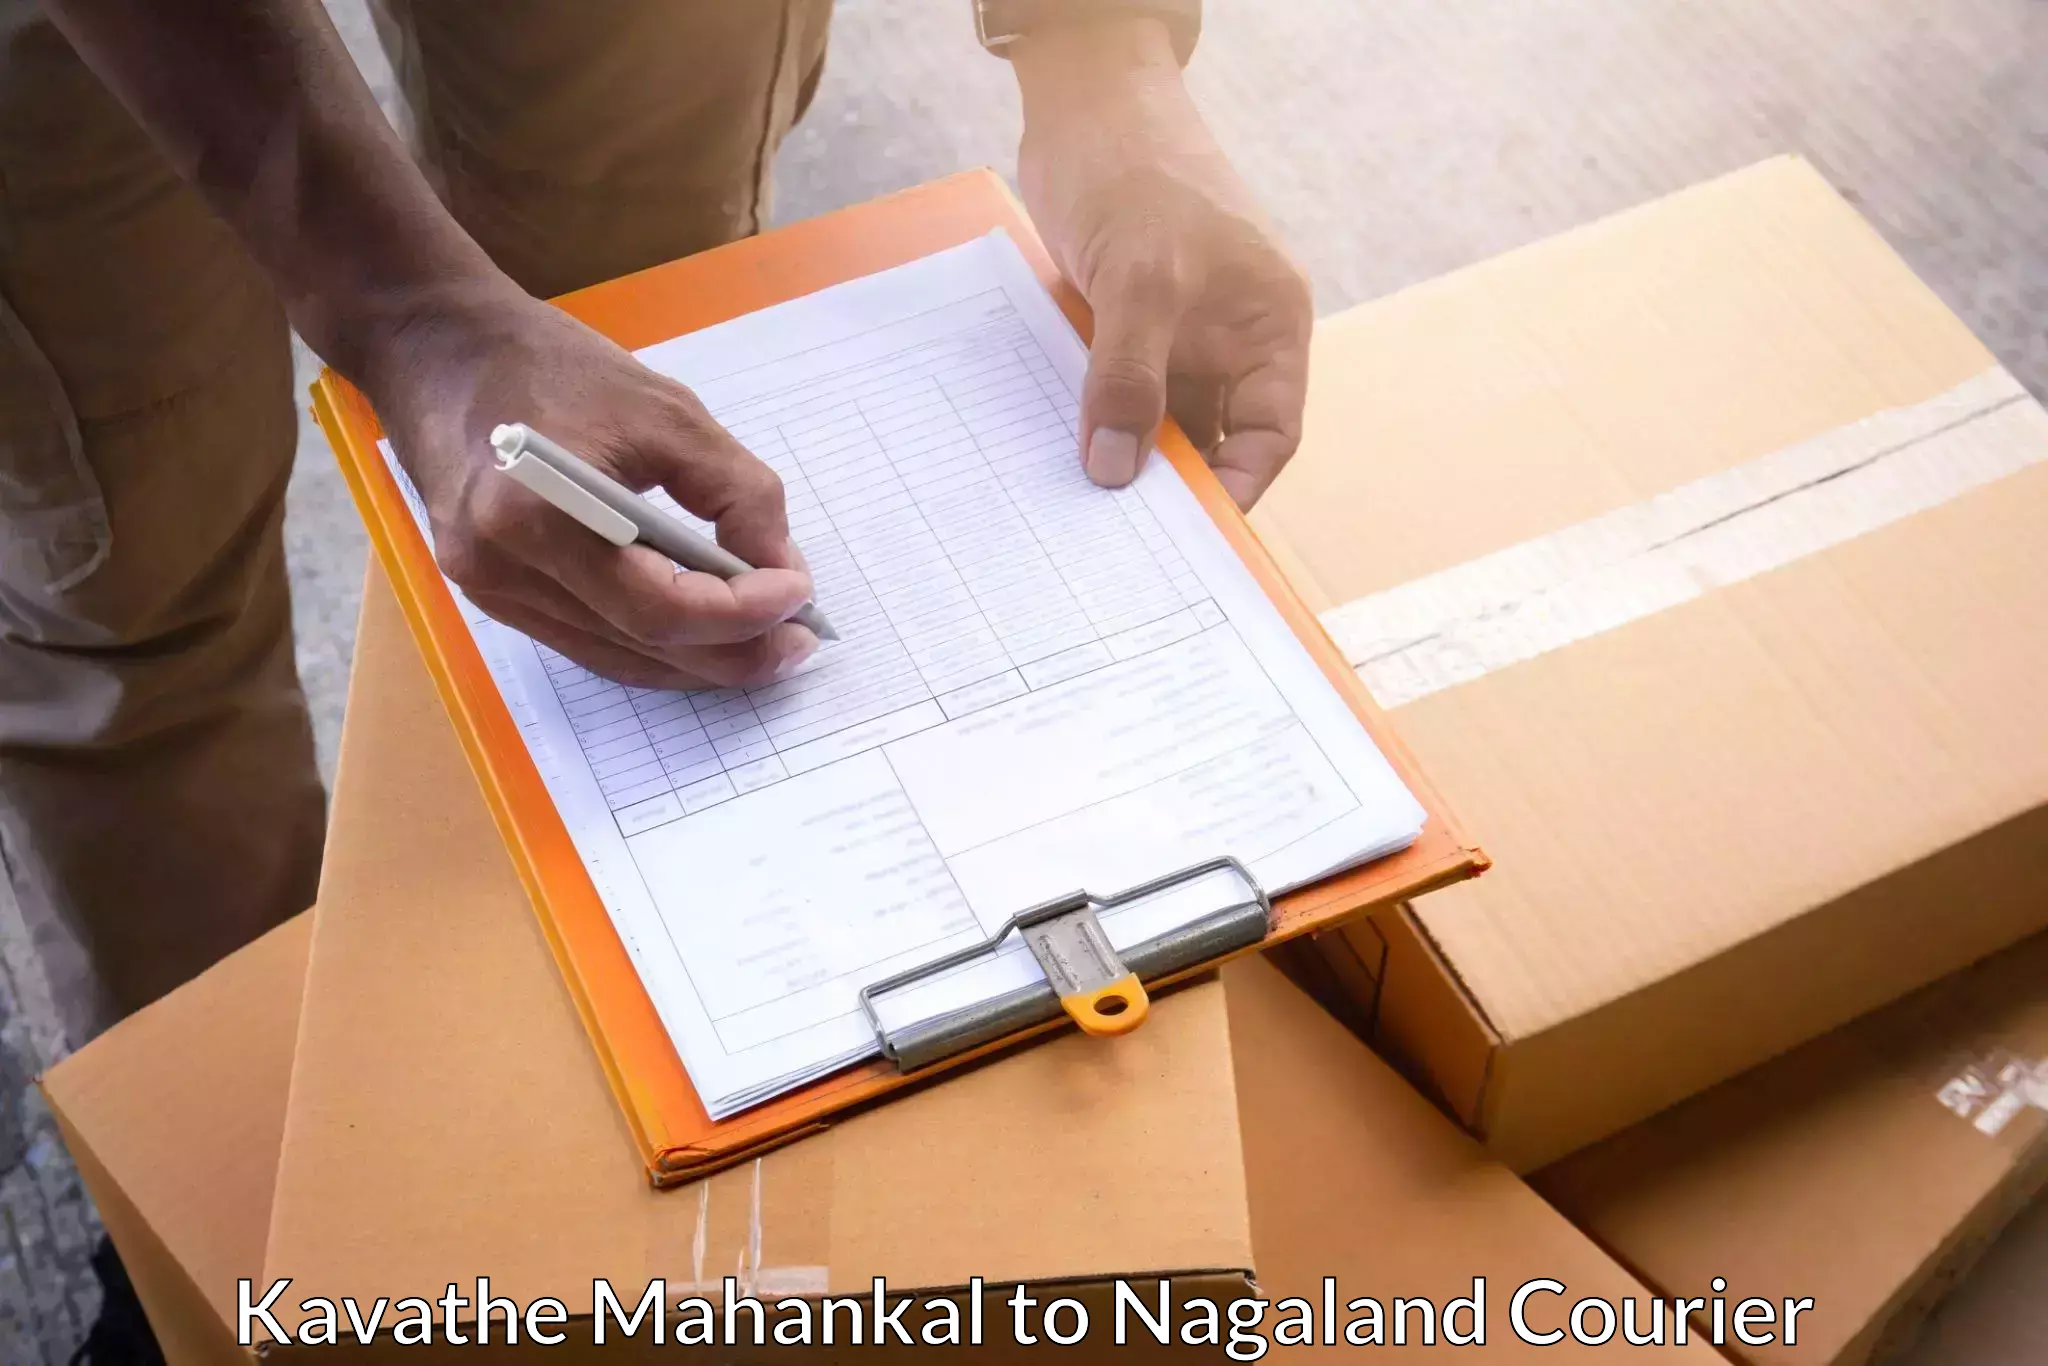 24/7 courier service Kavathe Mahankal to Nagaland